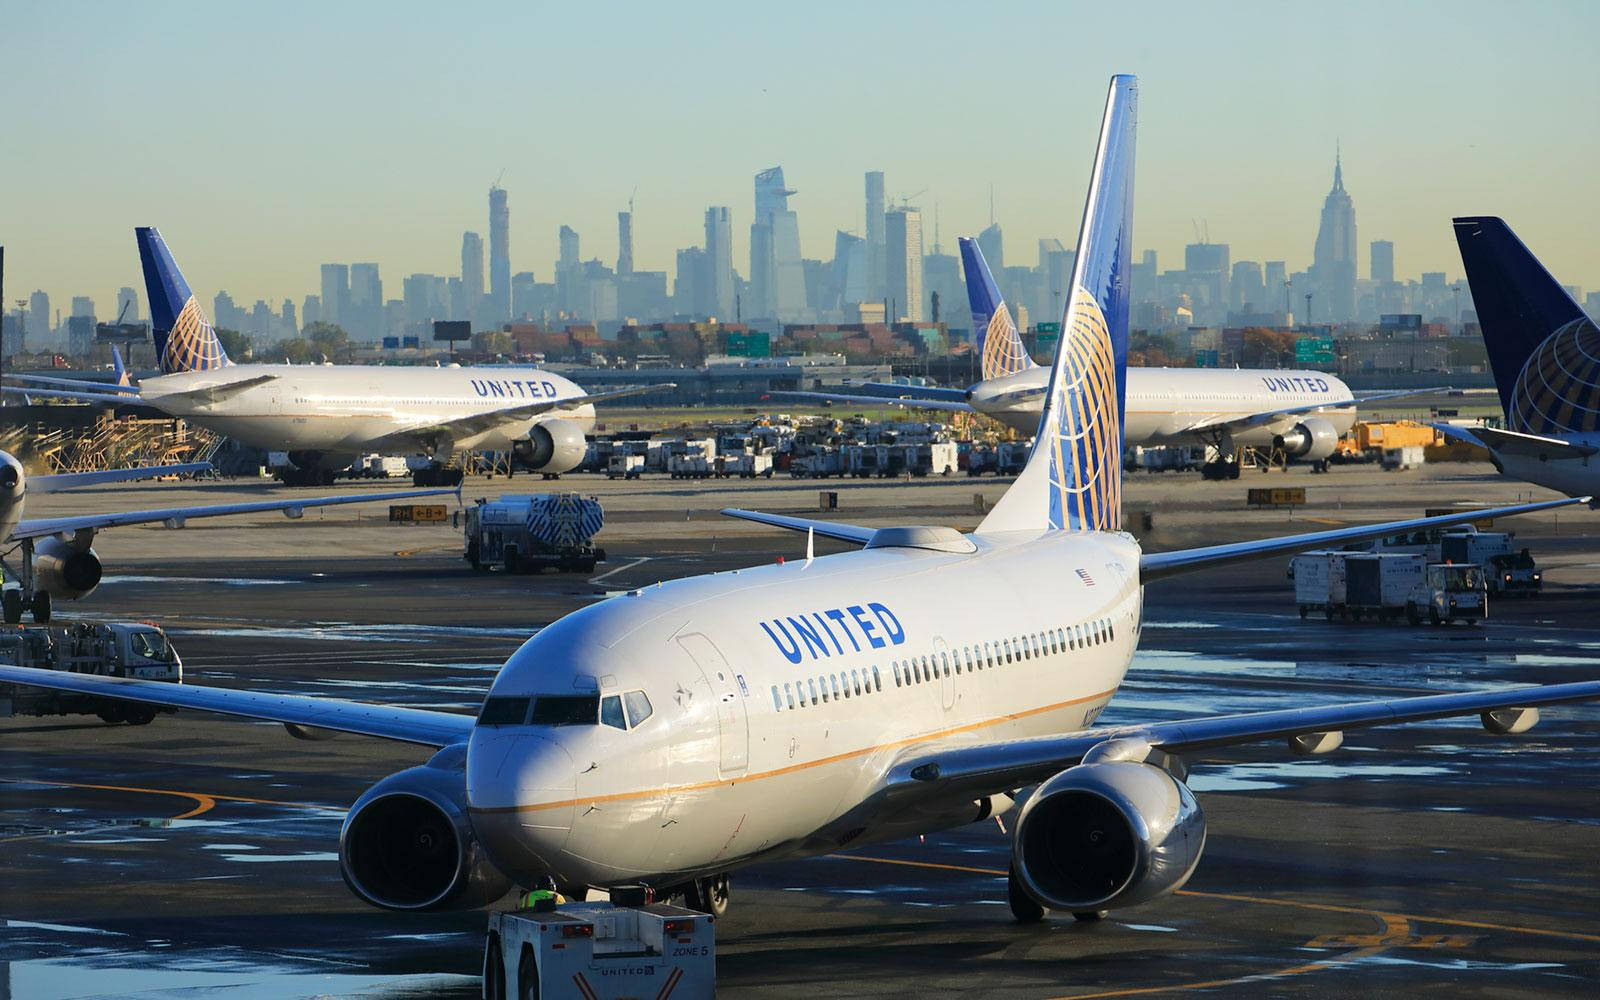 United Airlines Airplane In Newark Liberty International Airport Wallpaper